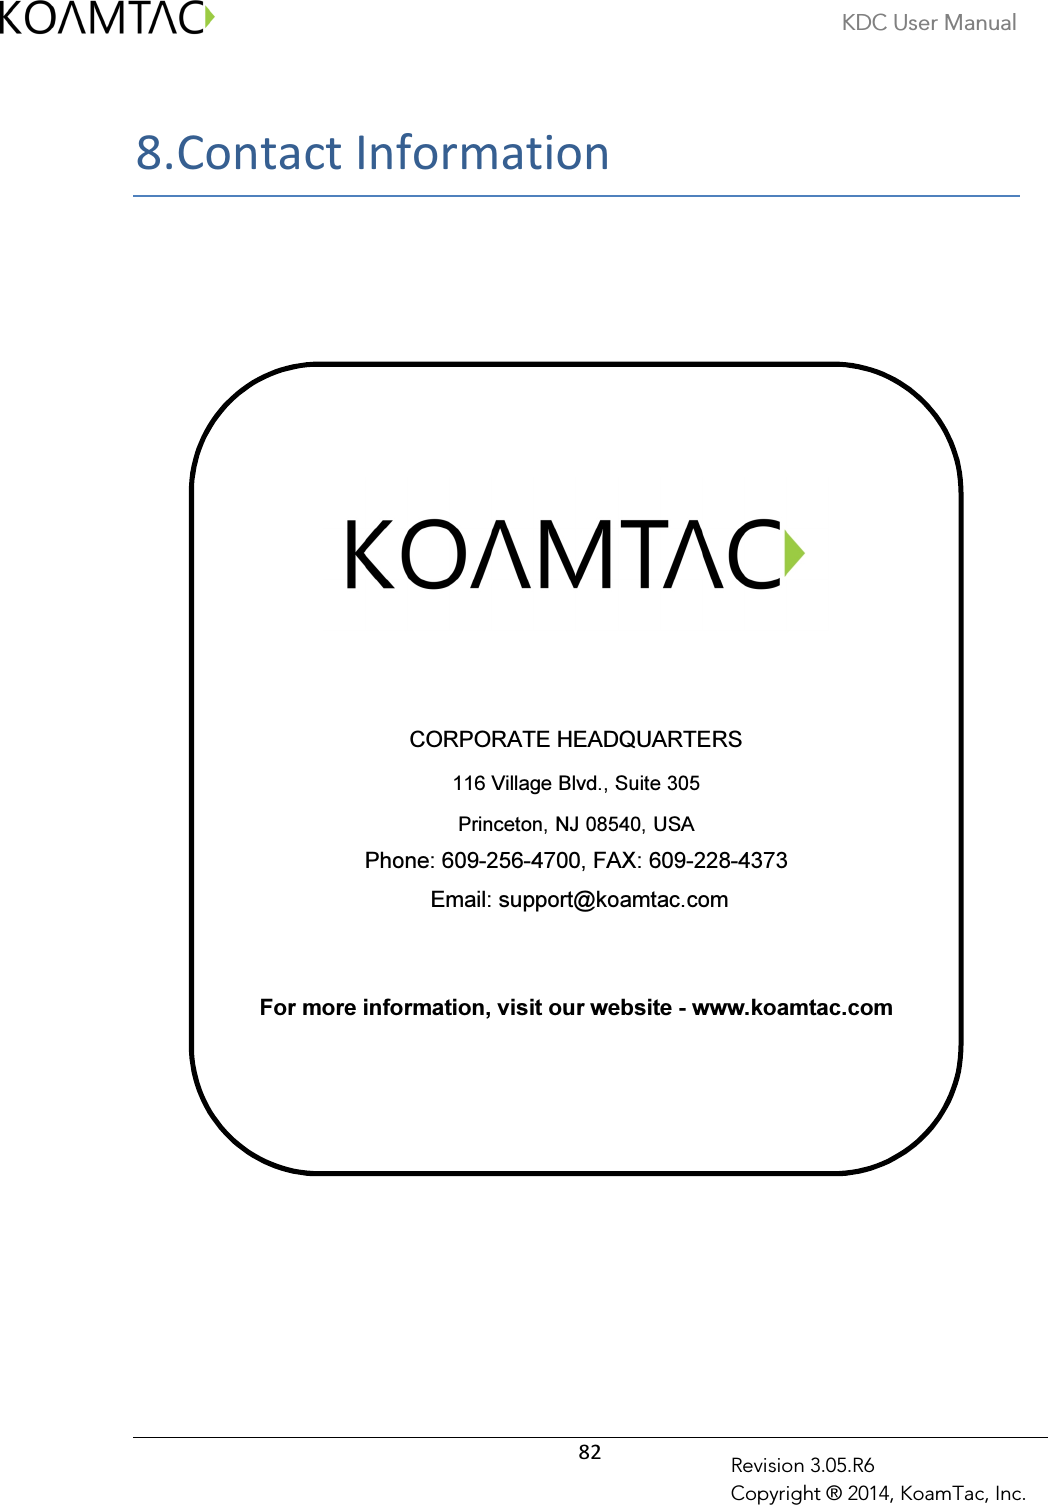 KDC User Manual  82 Revision 3.05.R6 Copyright ® 2014, KoamTac, Inc. 8. Contact Information          CORPORATE HEADQUARTERS 116 Village Blvd., Suite 305 Princeton, NJ 08540, USA Phone: 609-256-4700, FAX: 609-228-4373  Email: support@koamtac.com   For more information, visit our website - www.koamtac.com        